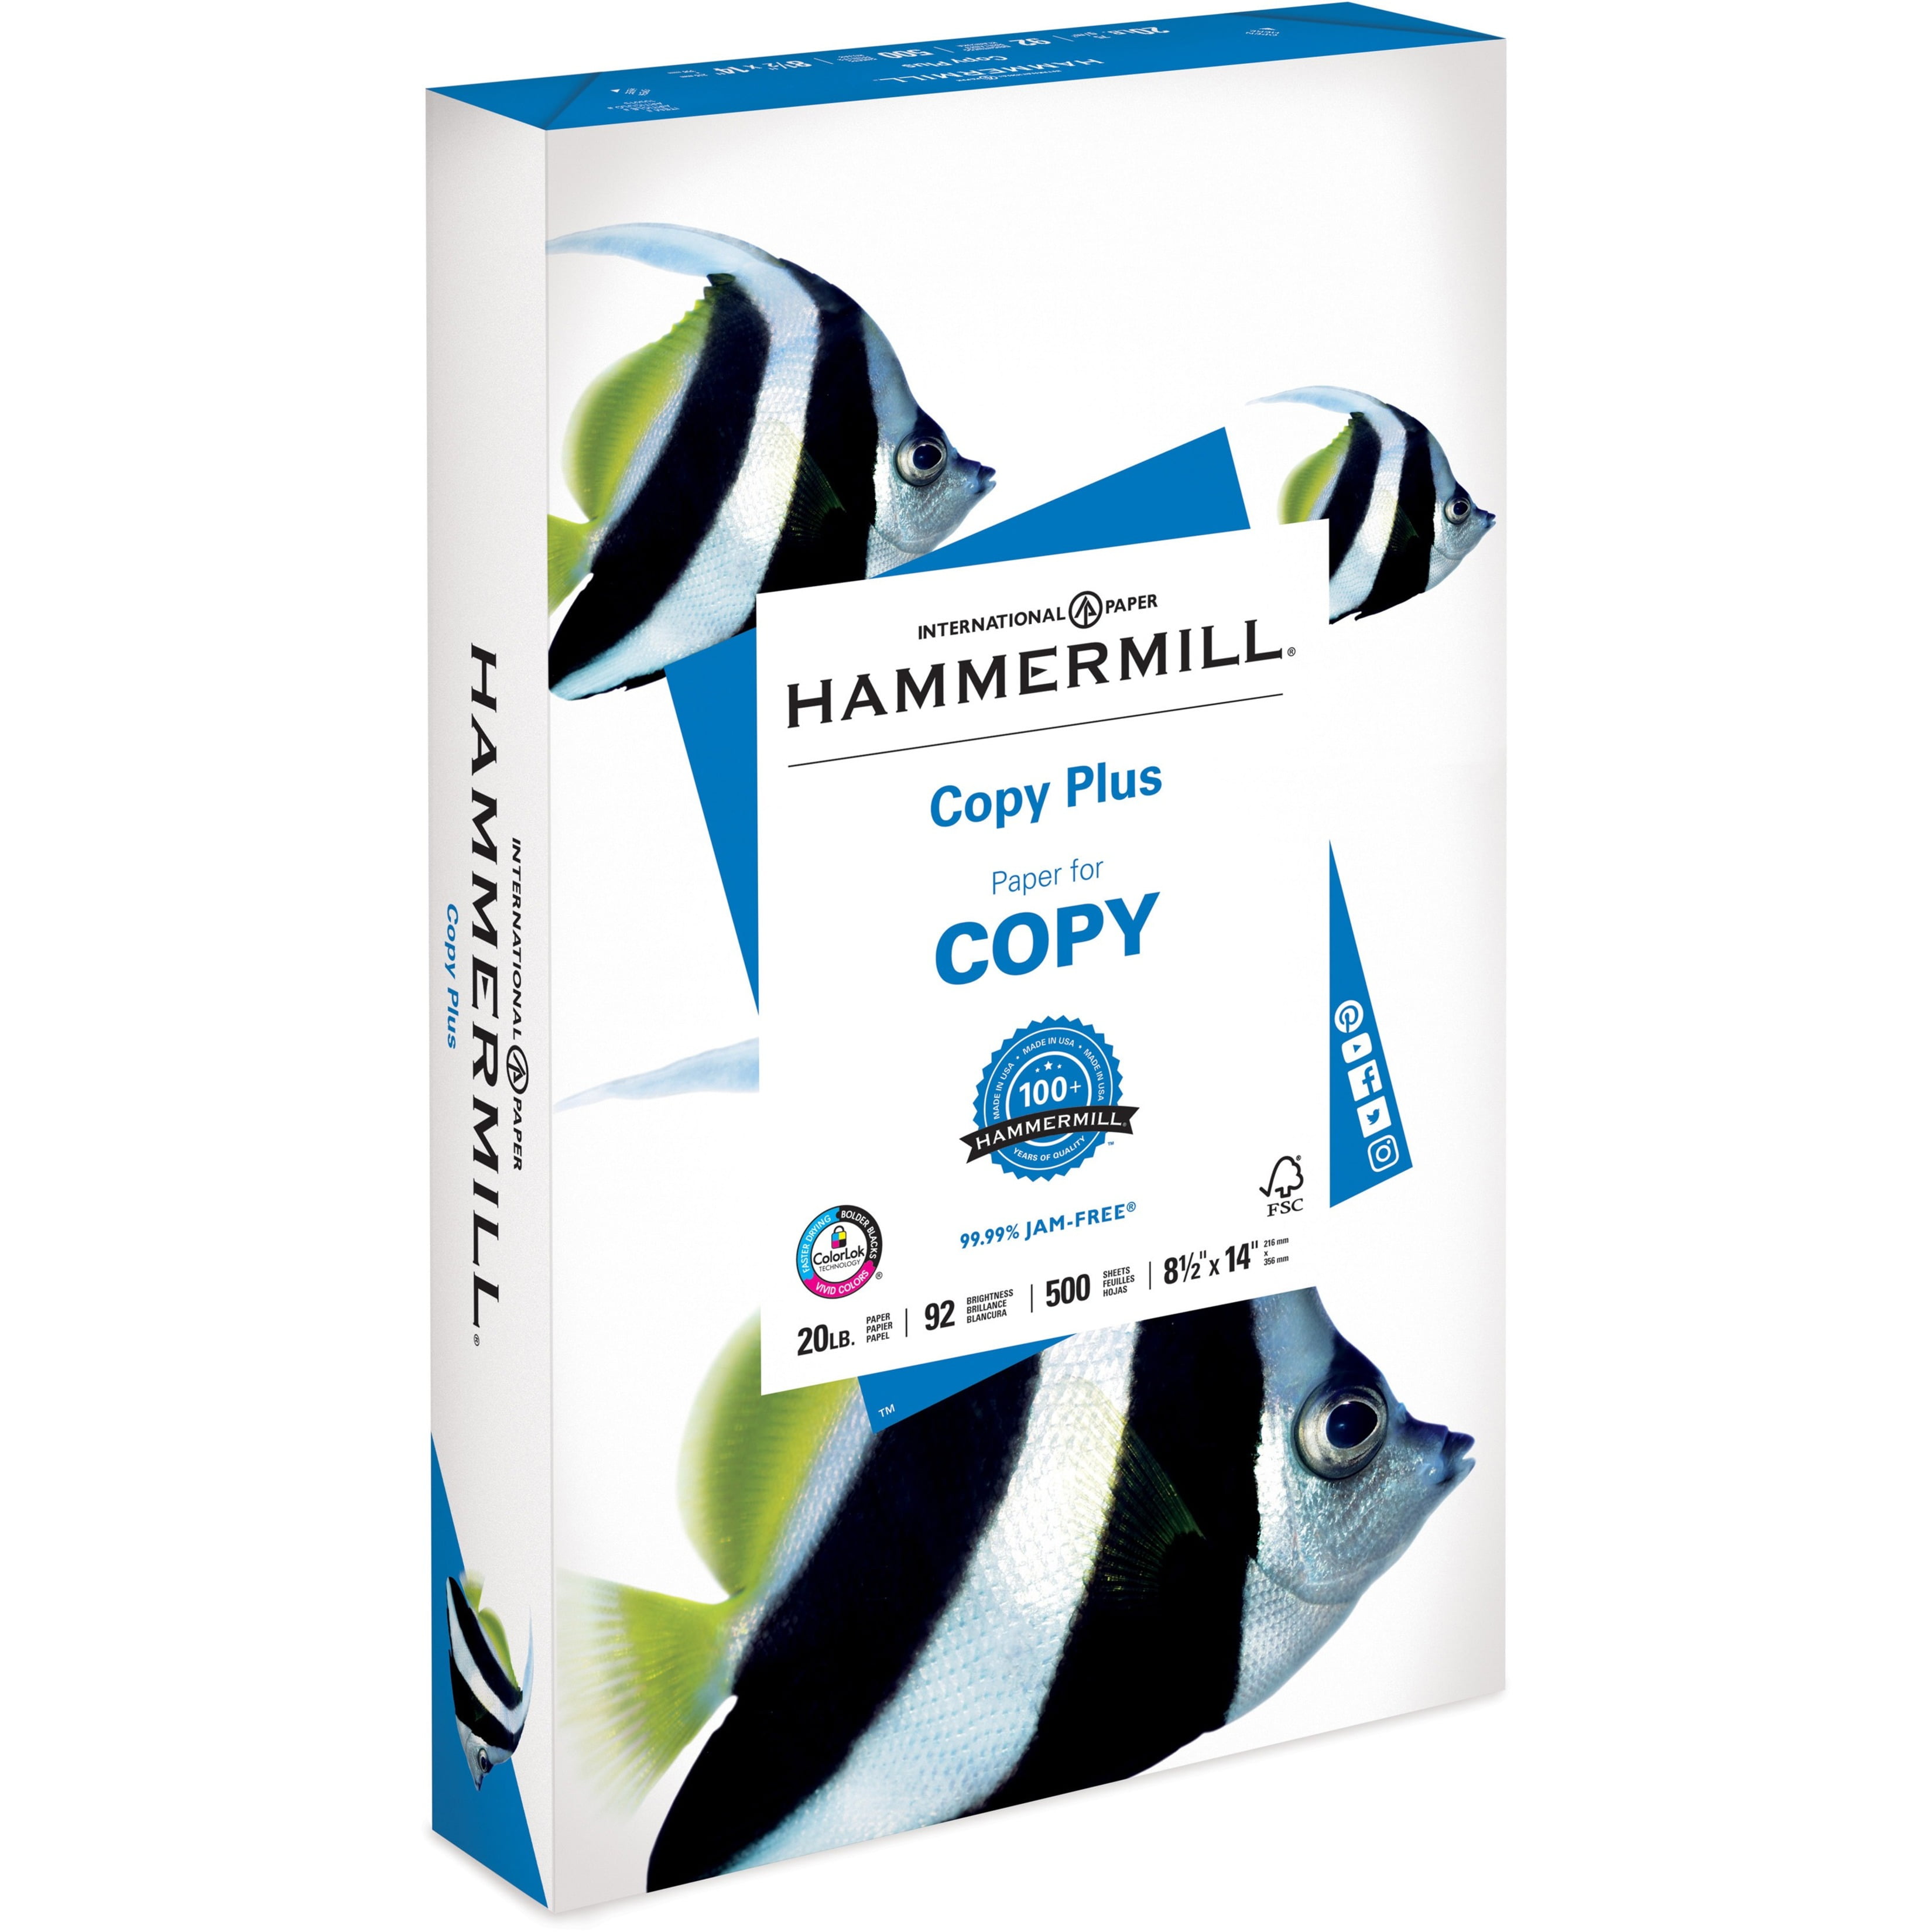 500/Ream 20 lbs. 92 Brightness Hammermill Copy Plus 8.5" x 11" Copy Paper